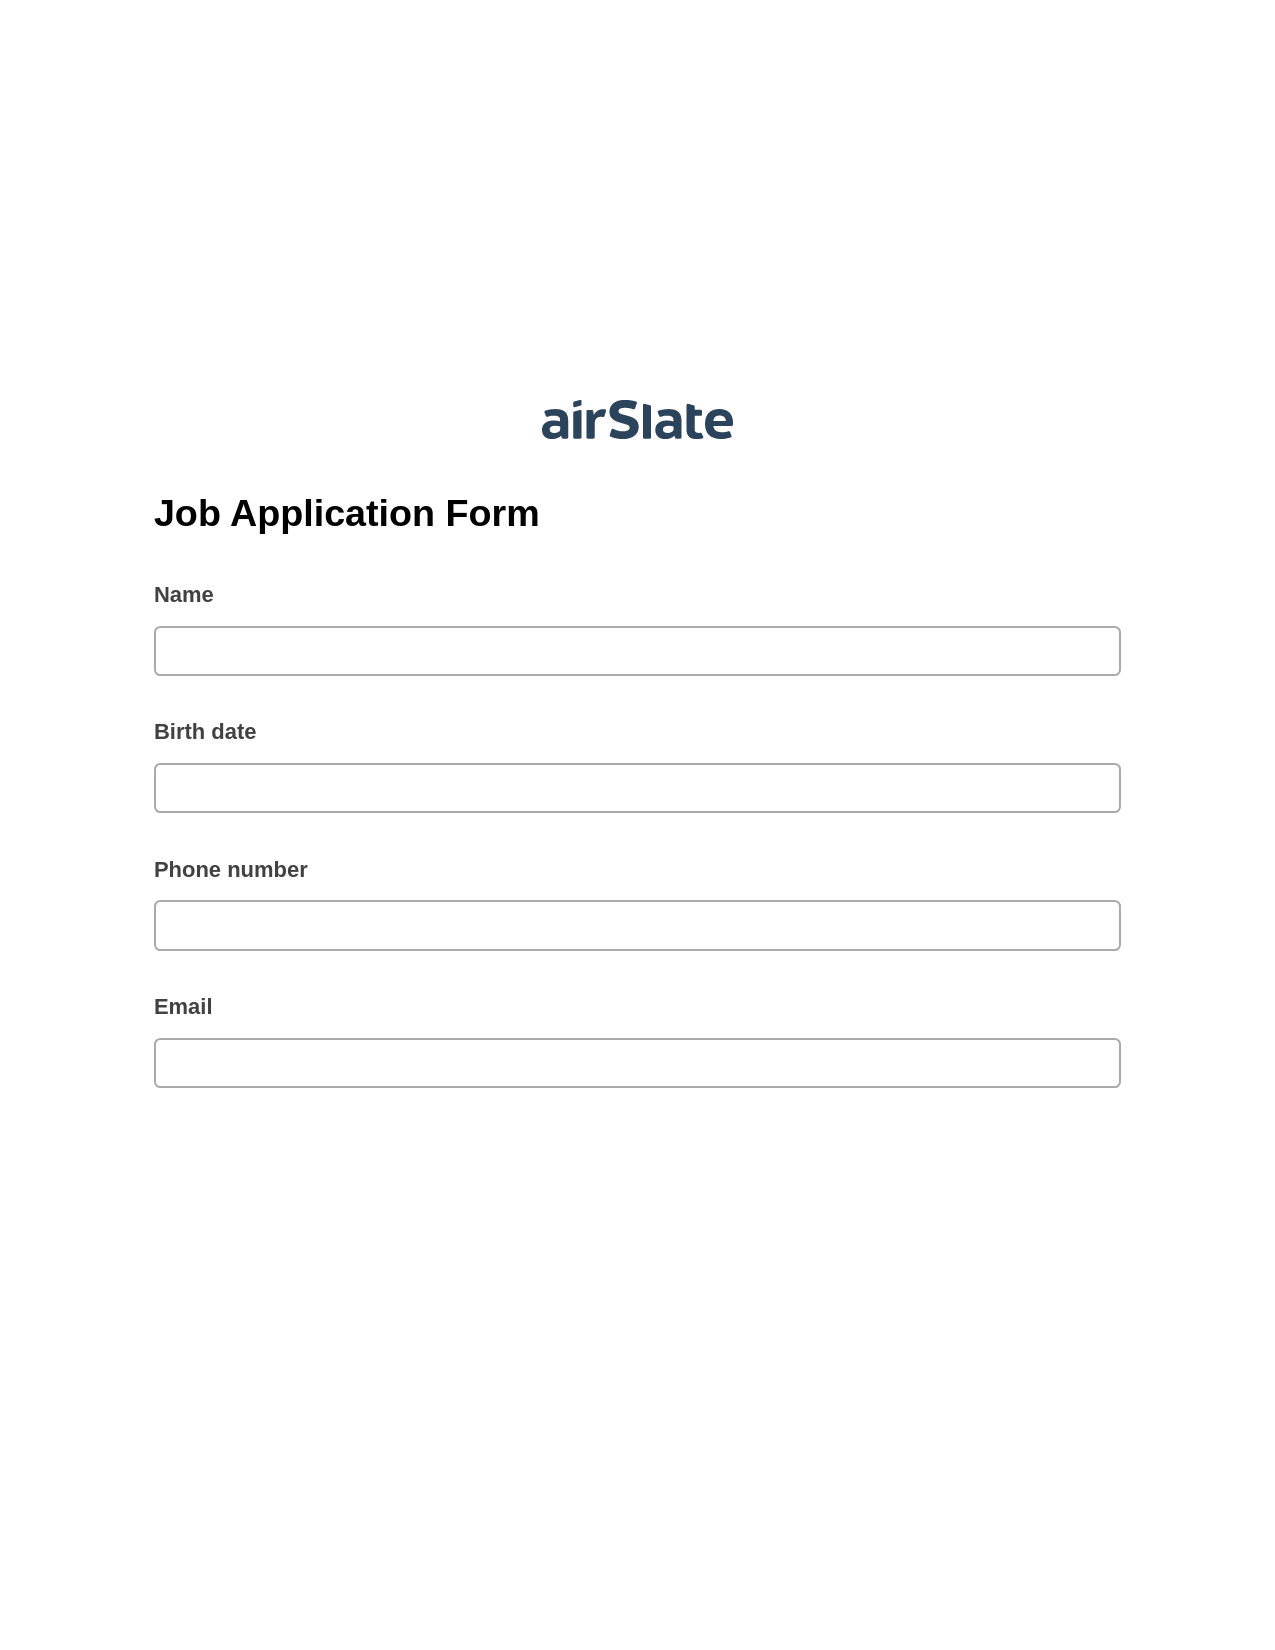 Job Application Form Pre-fill Slate from MS Dynamics 365 Records Bot, Lock the slate bot, Box Bot